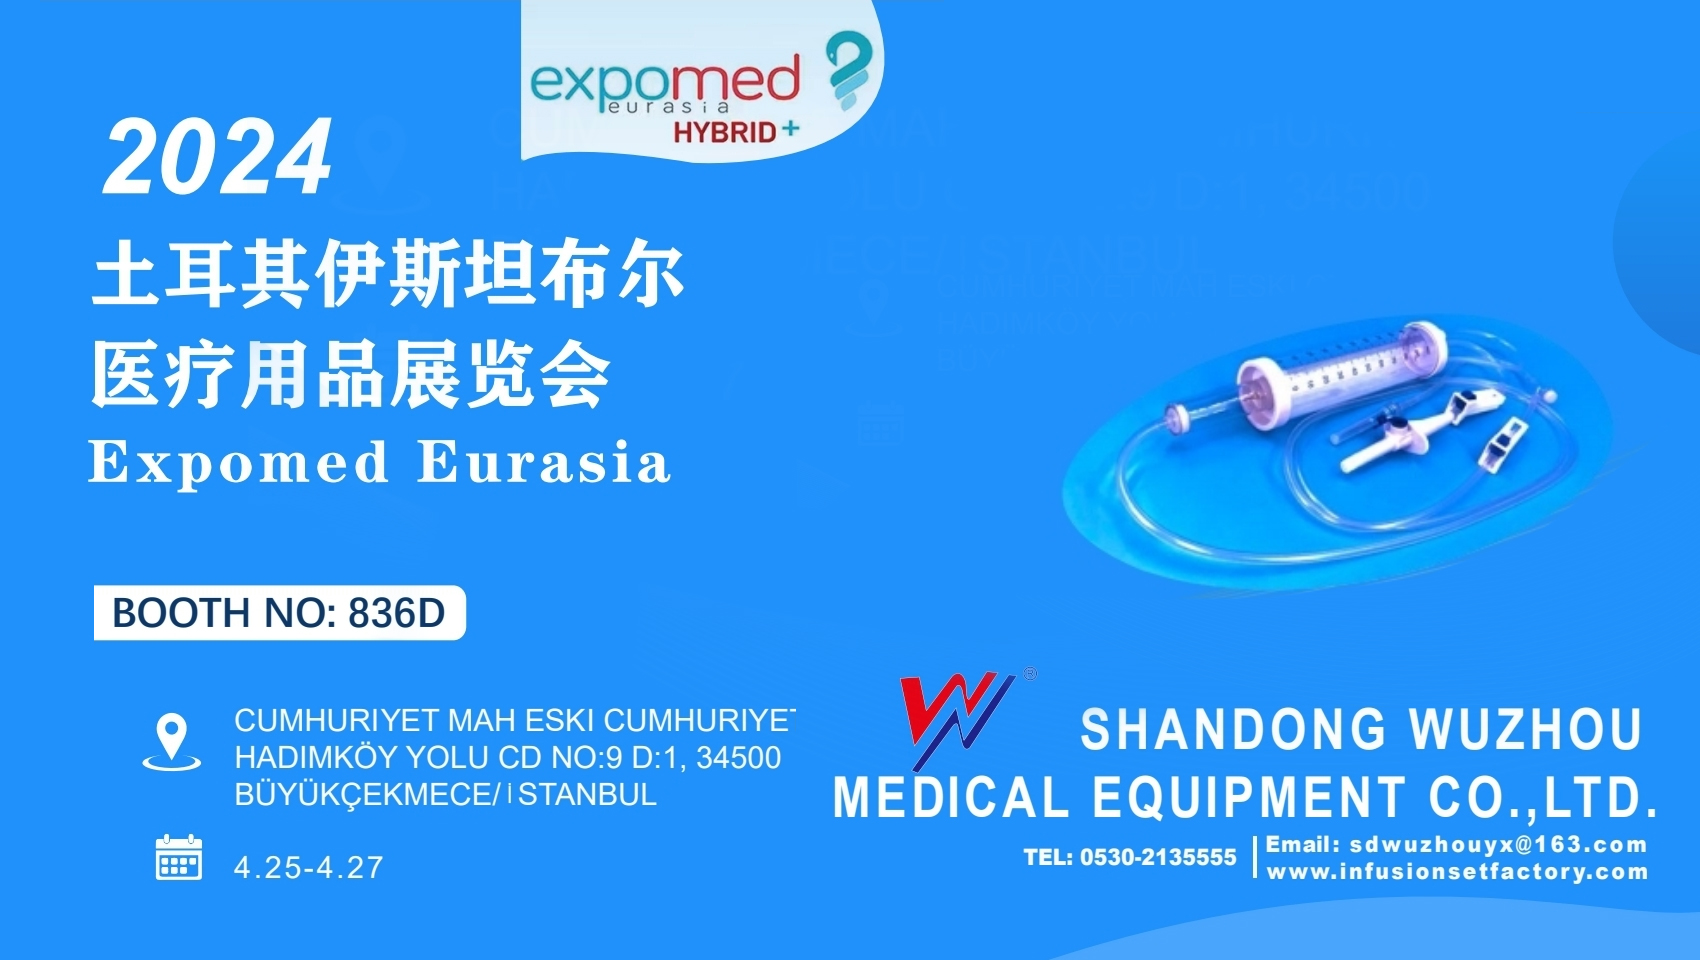 Shandong Wuzhou Medical Equipment Co., Ltd.